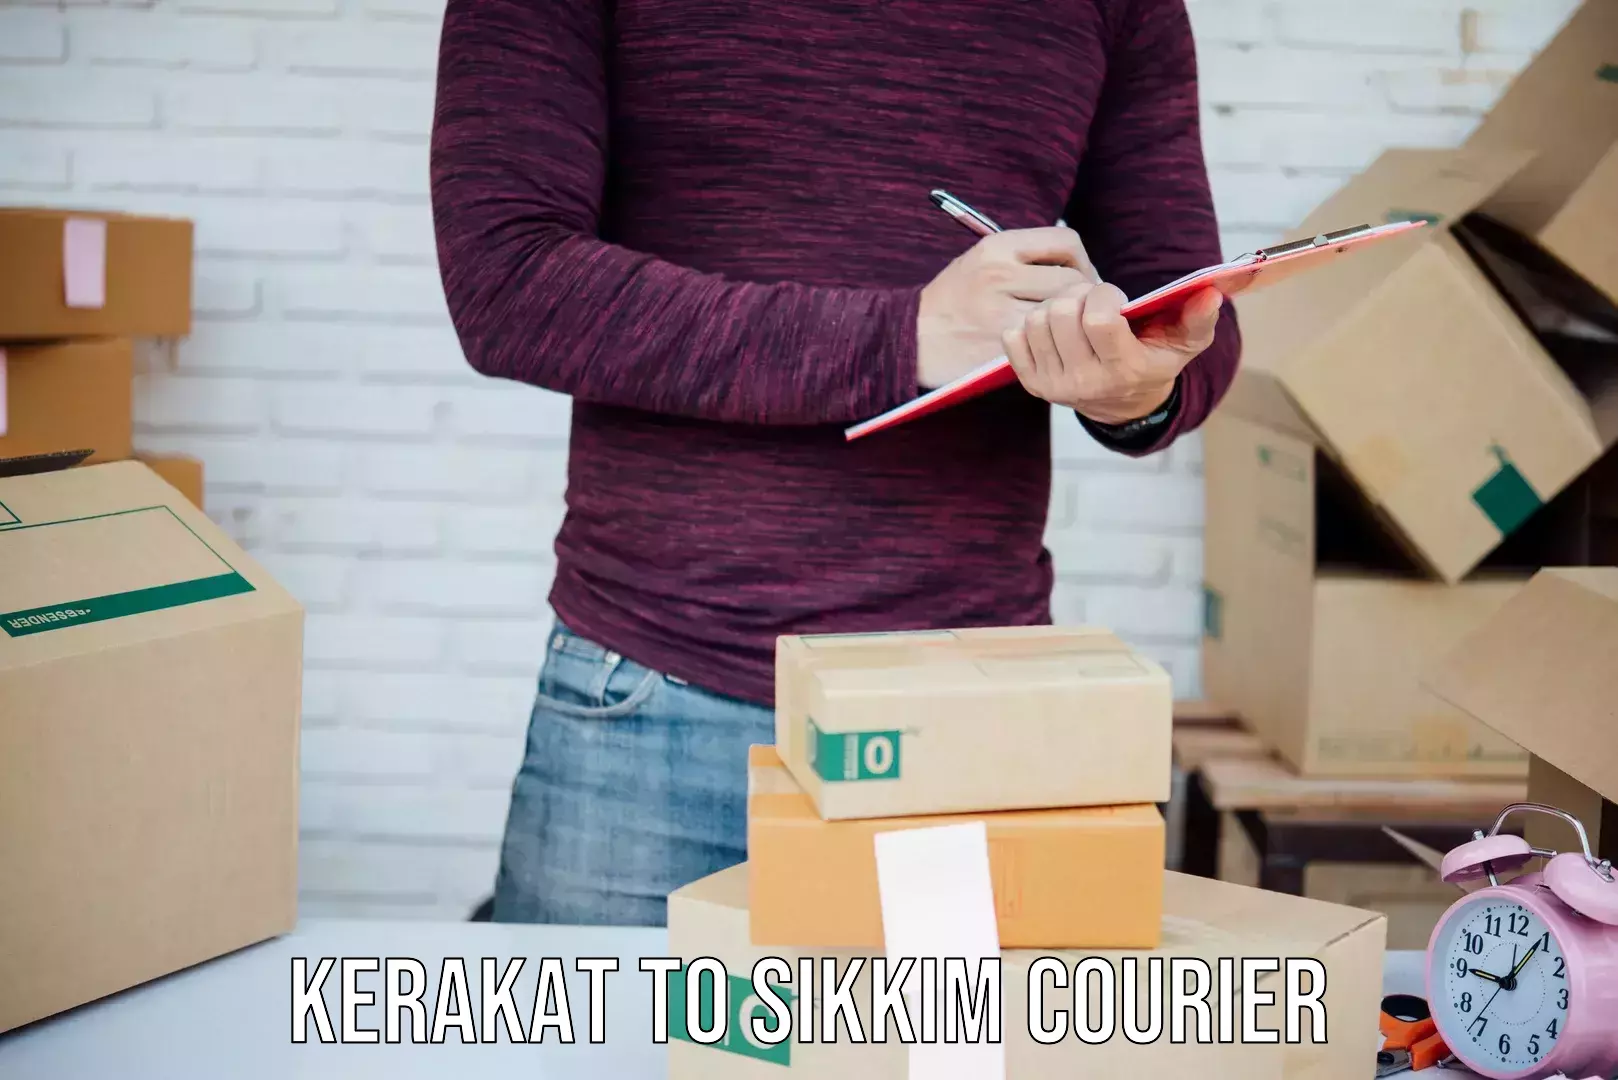 Personalized courier experiences Kerakat to Mangan